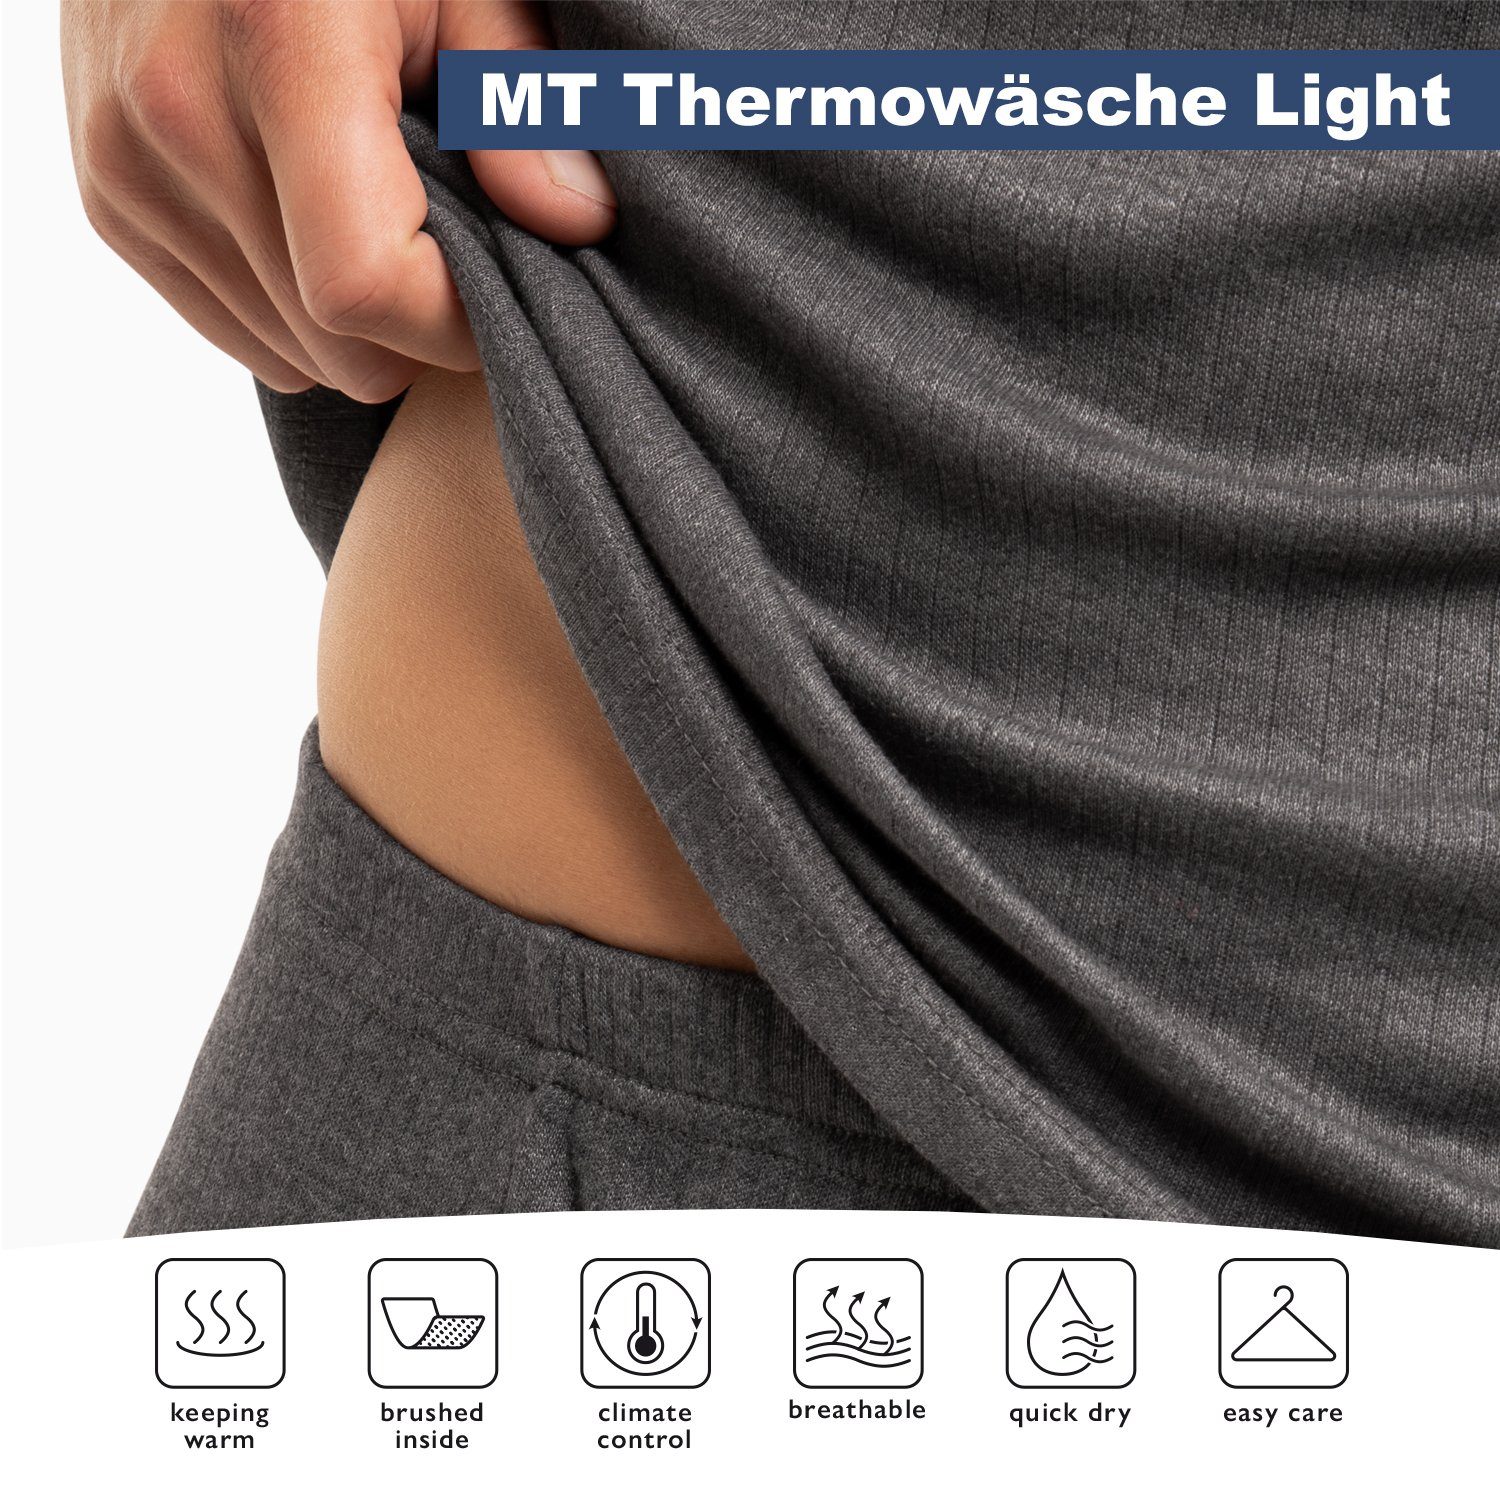 warme MT Thermo Ski- Unterhosen & Unterhose Hellgrau Funktionshose Light, Herren lange